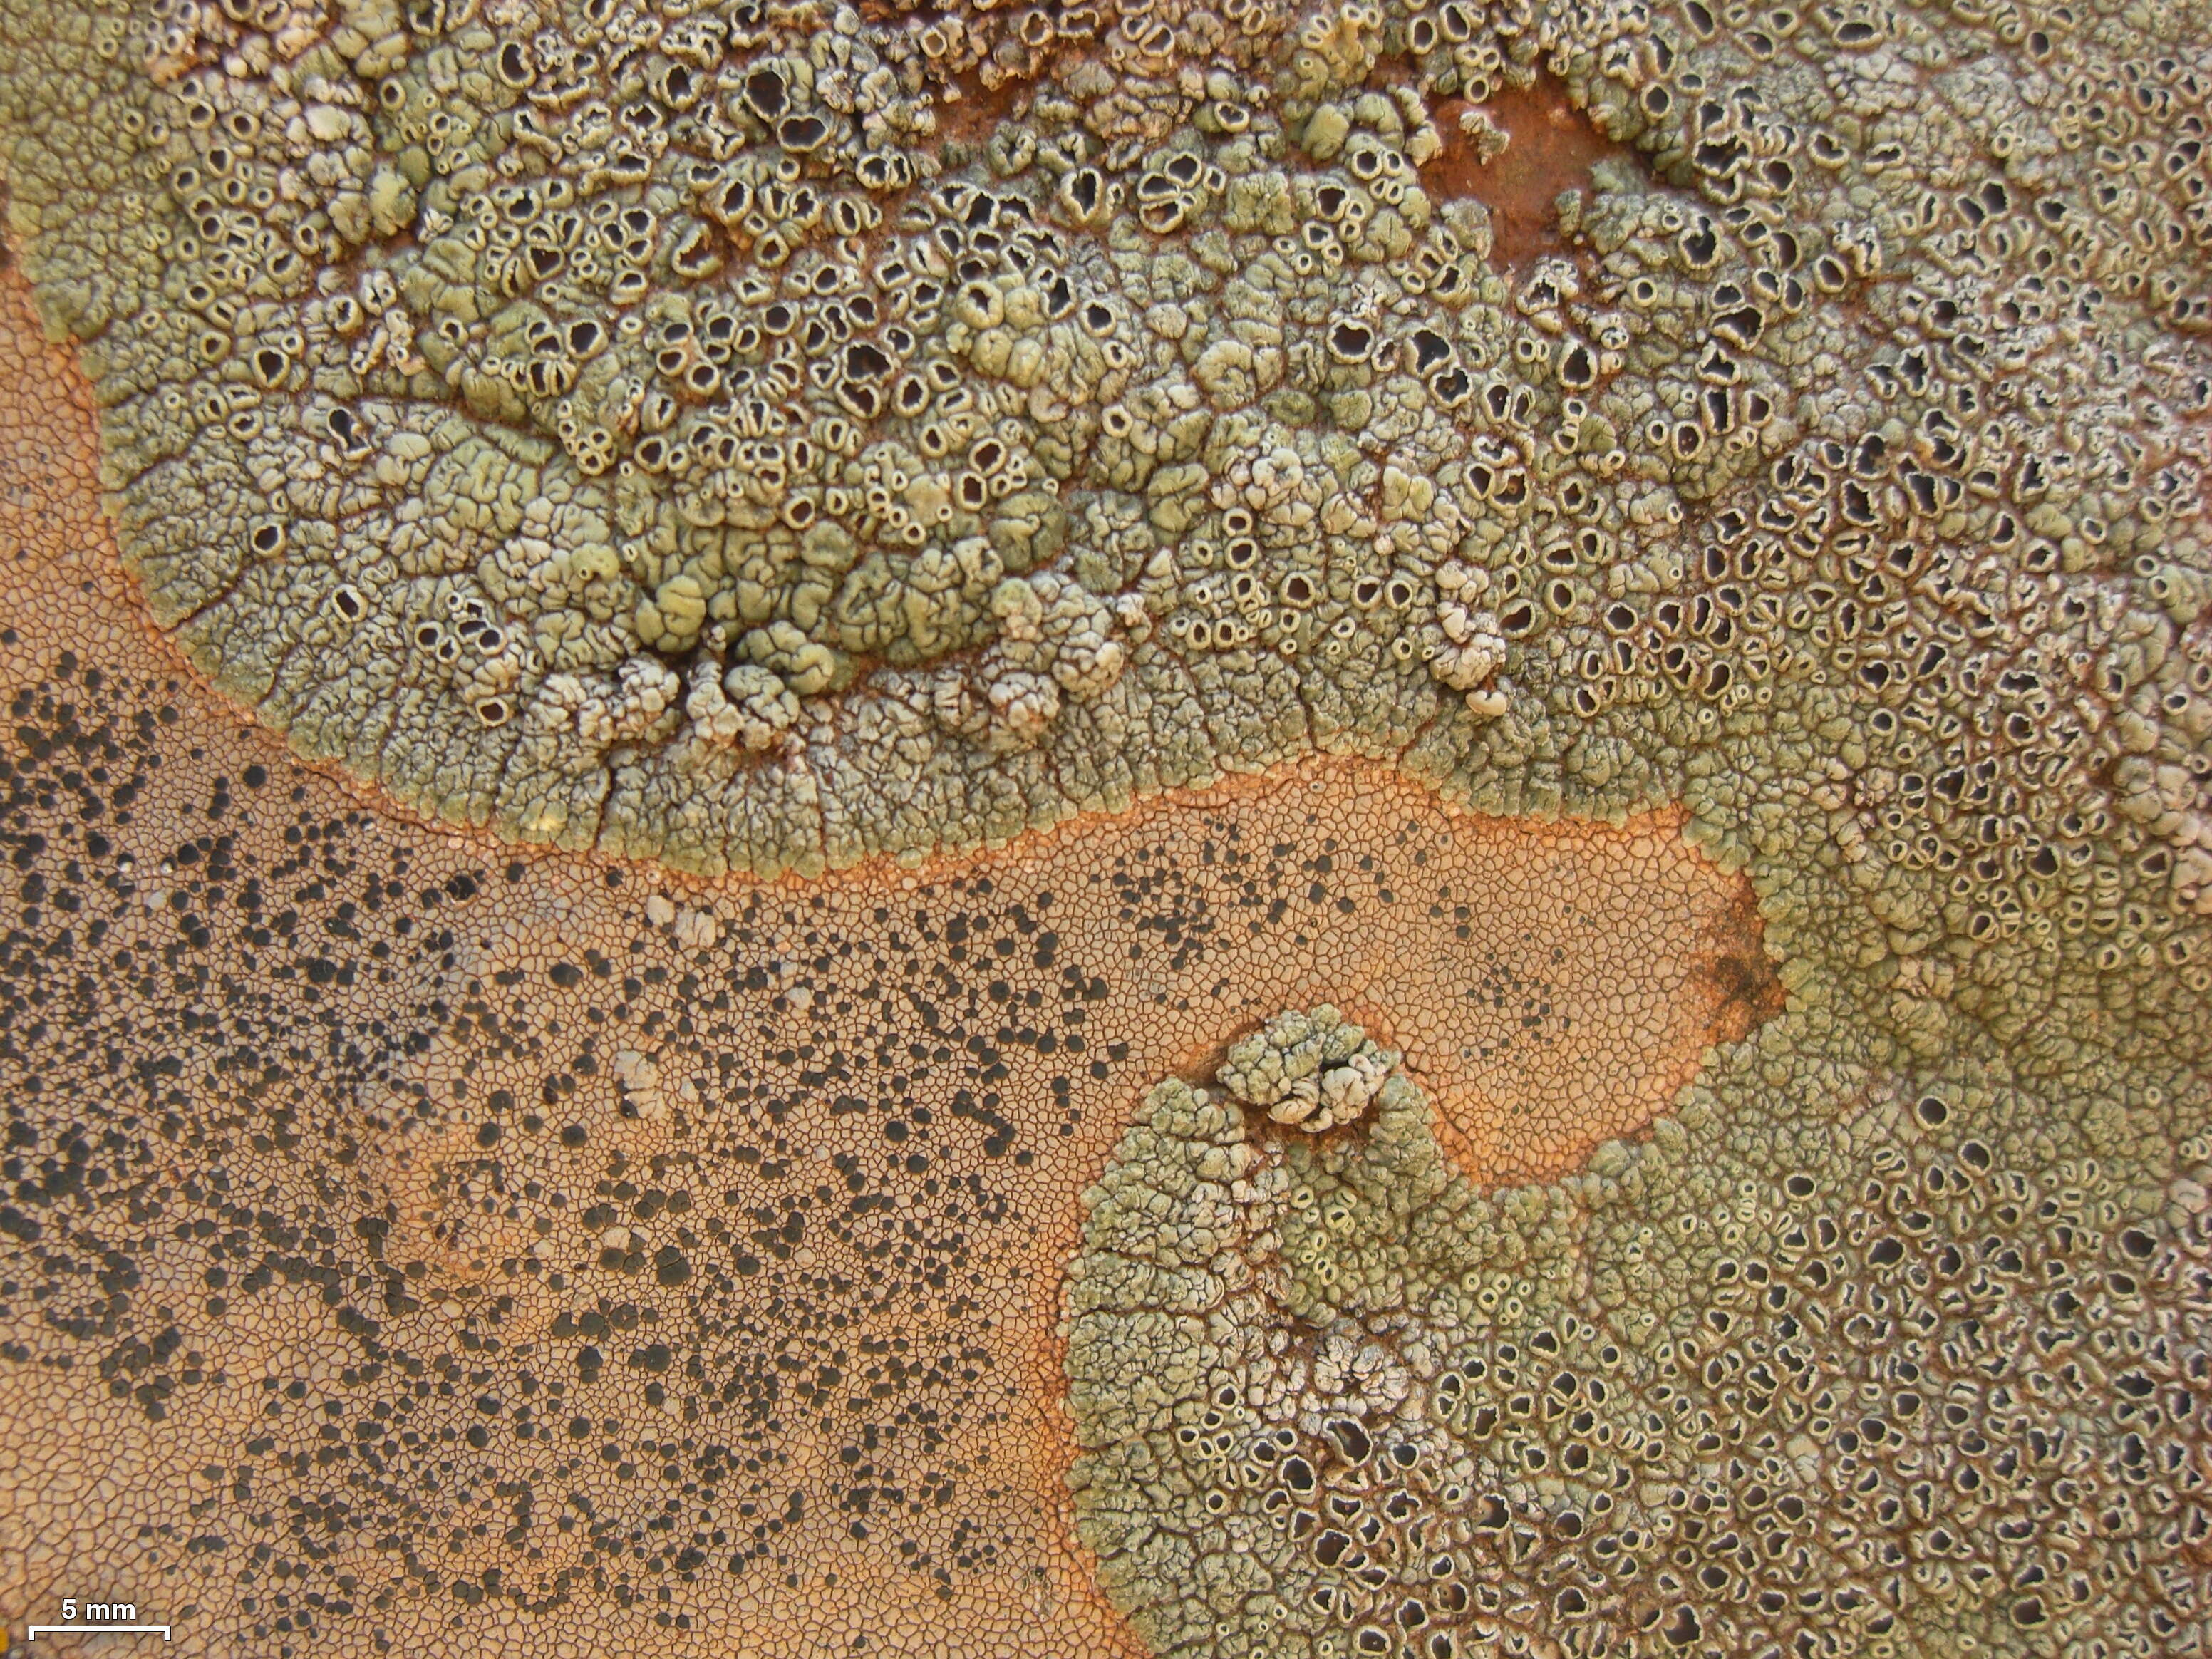 Image of Varying rim-lichen;   Rim lichen